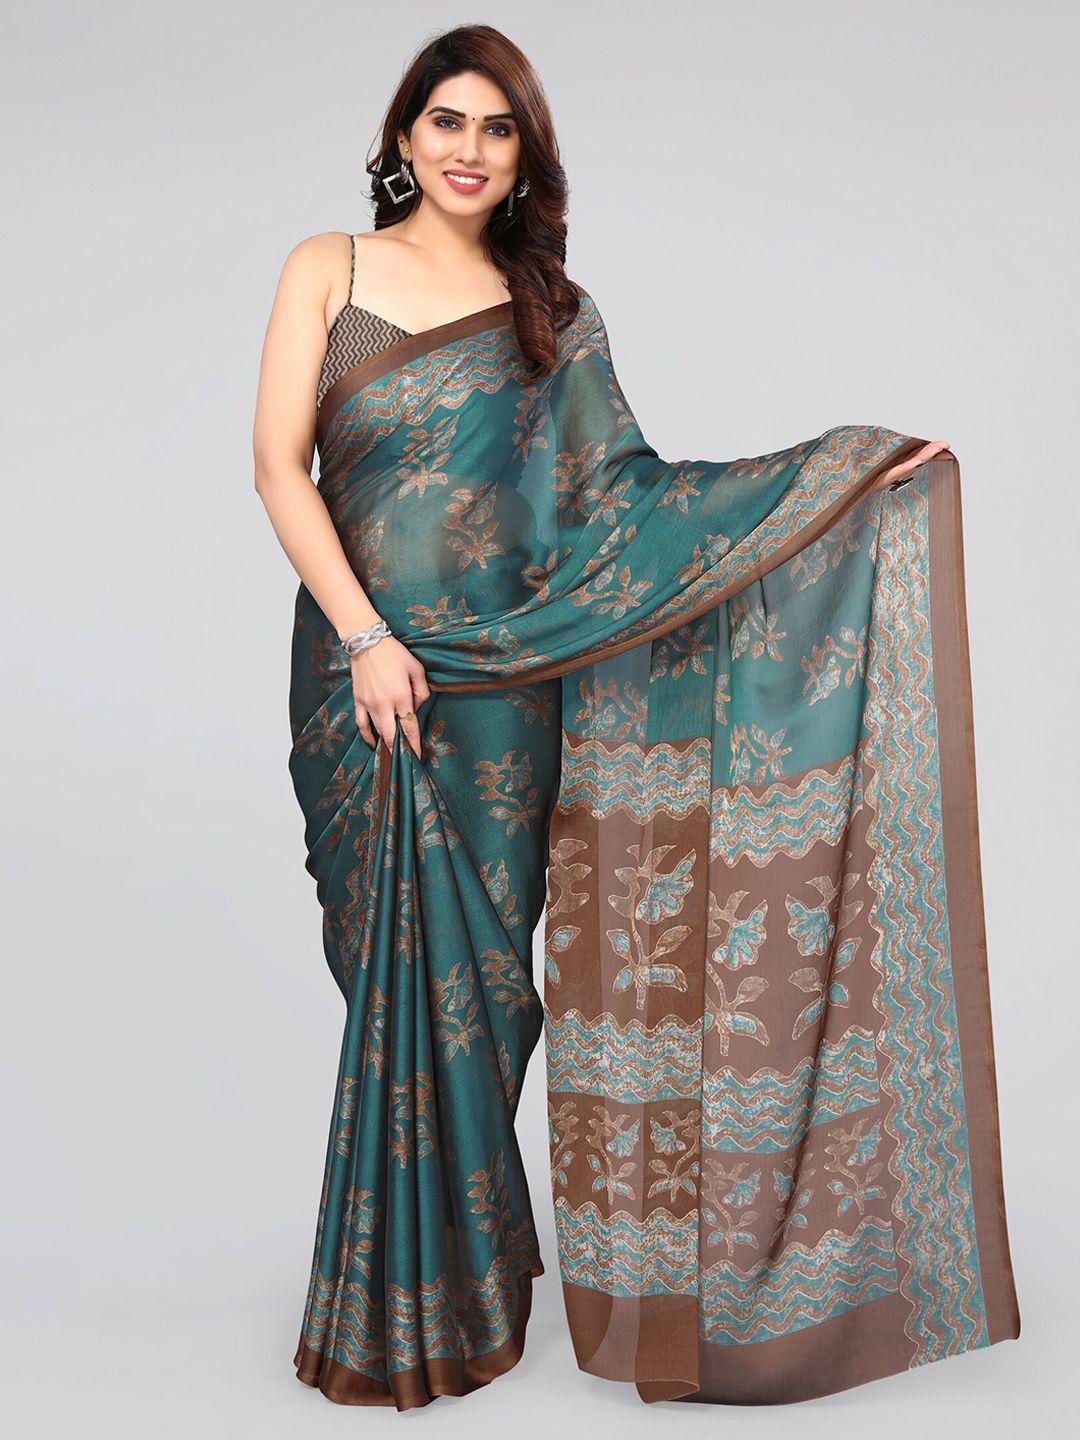 mirchi fashion teal & brown floral block printed saree